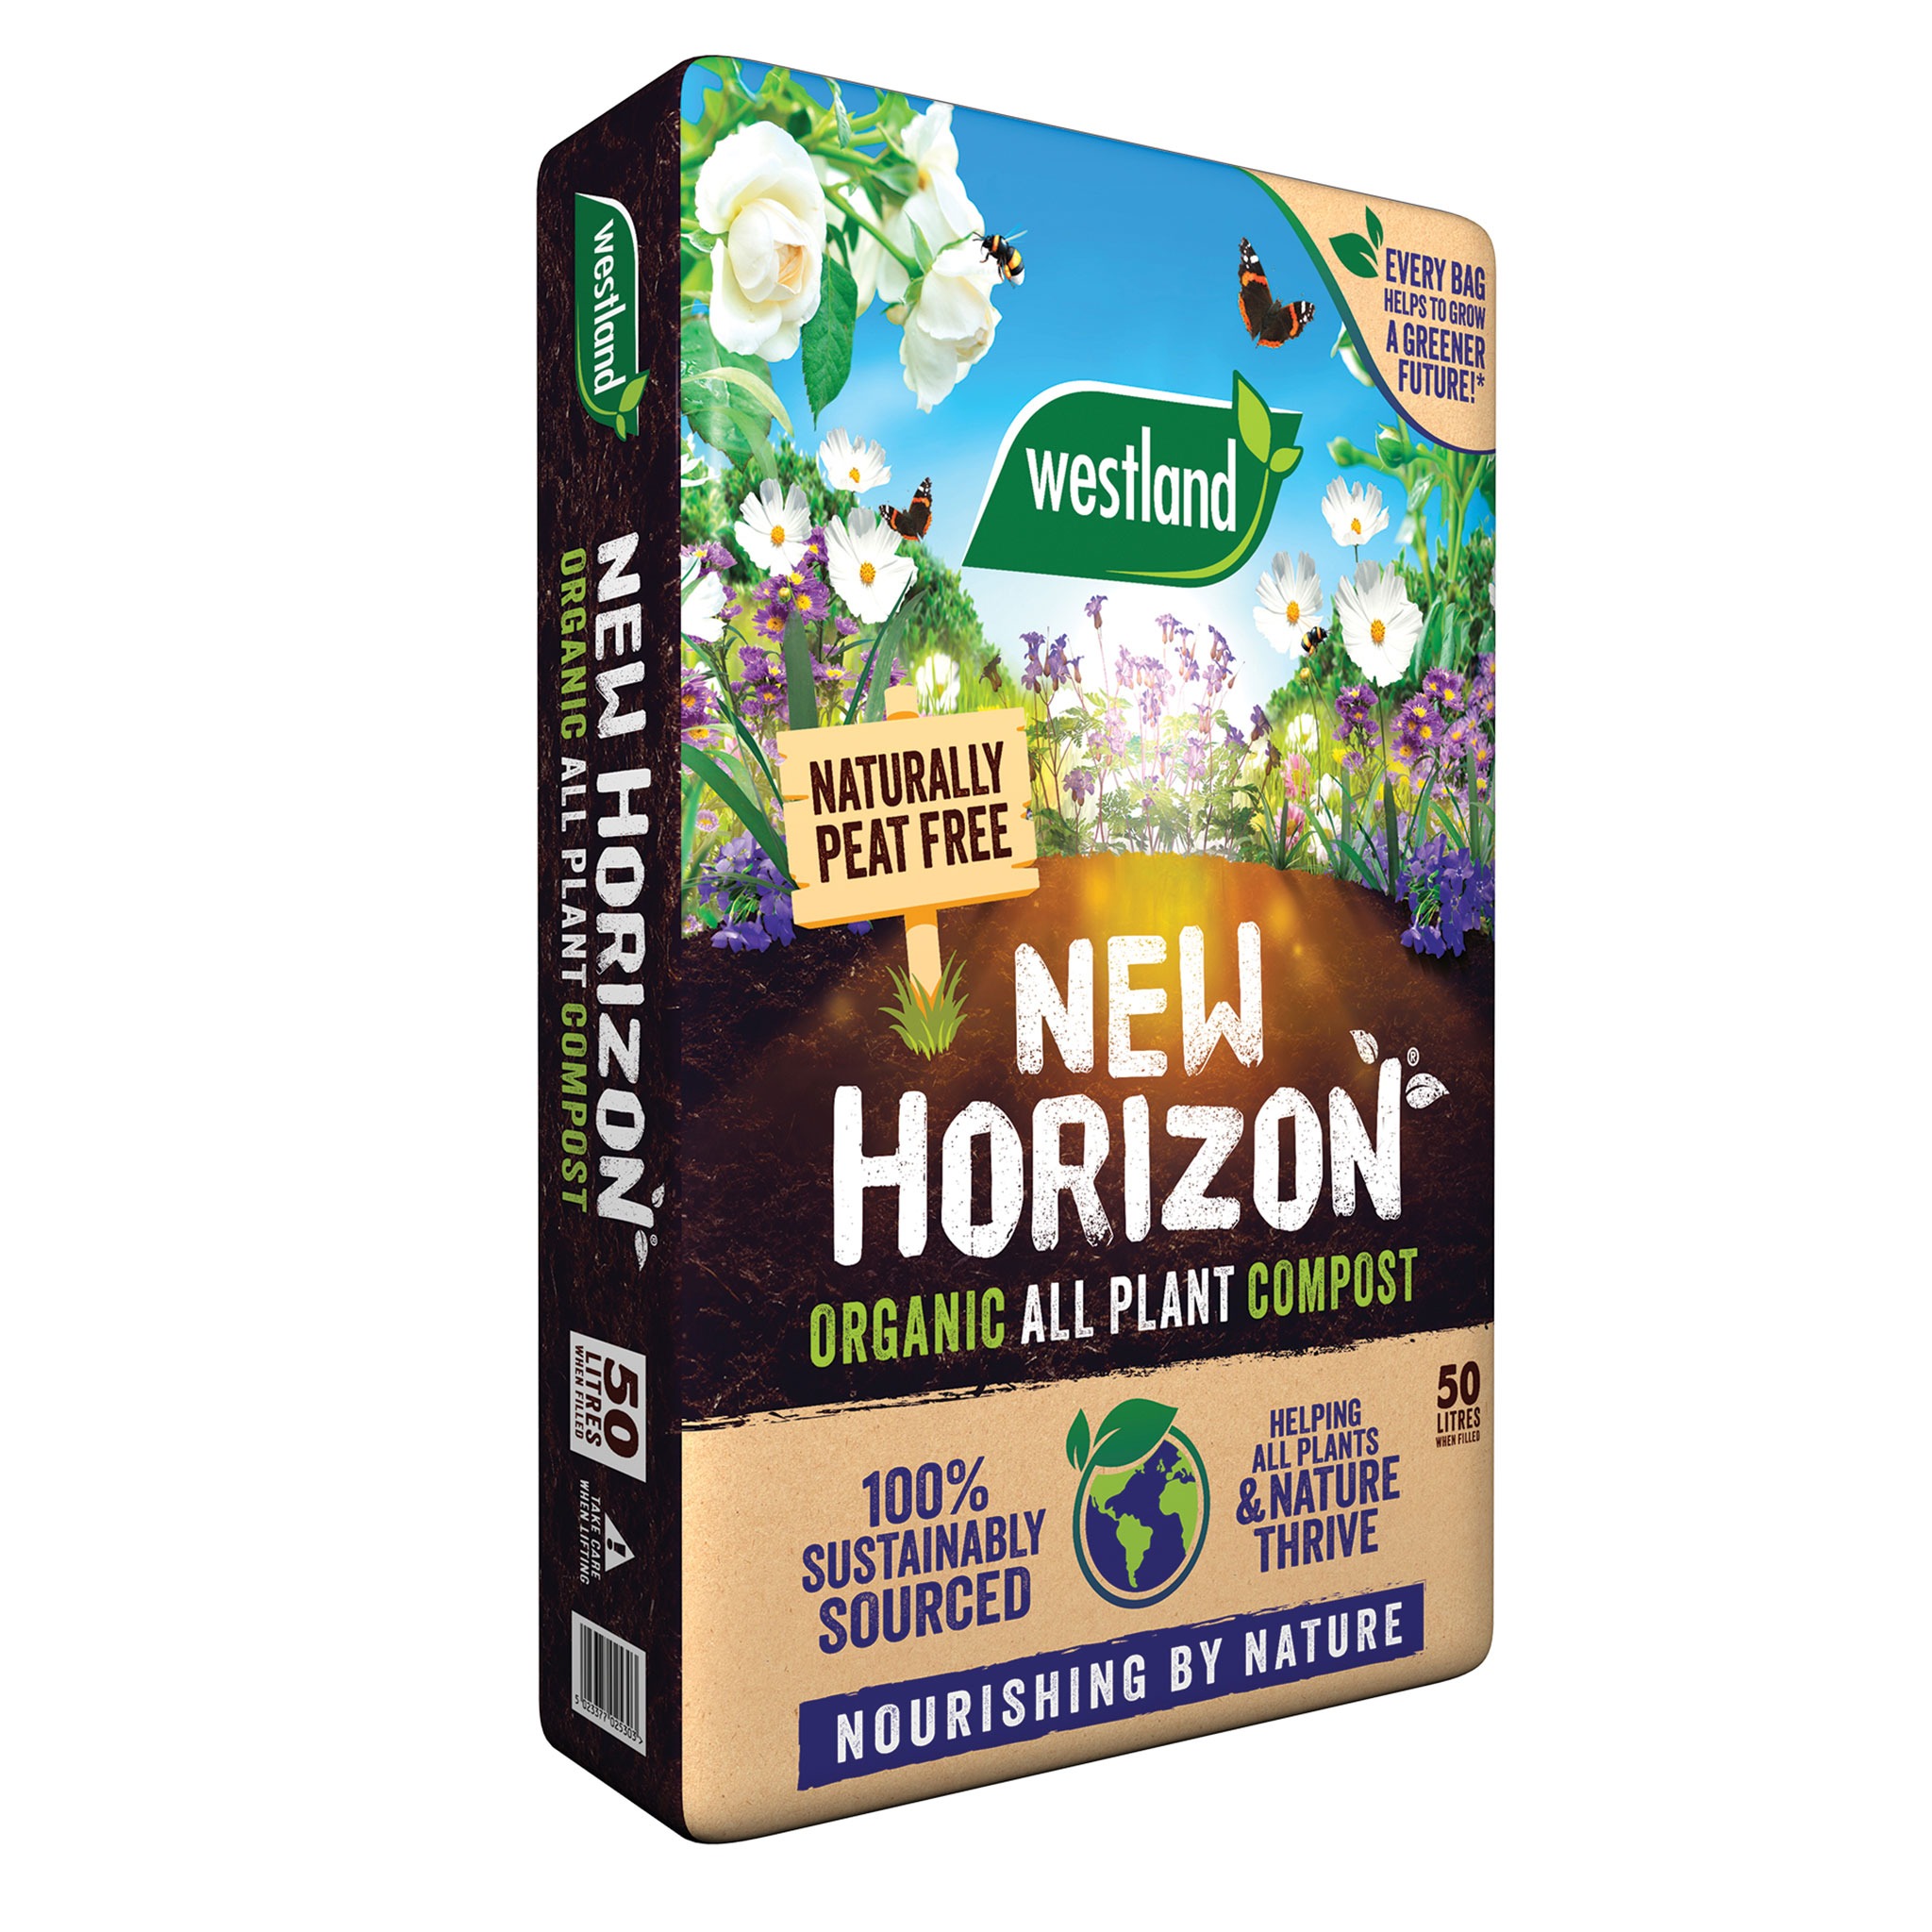 New Horizon Organic All Plant Compost